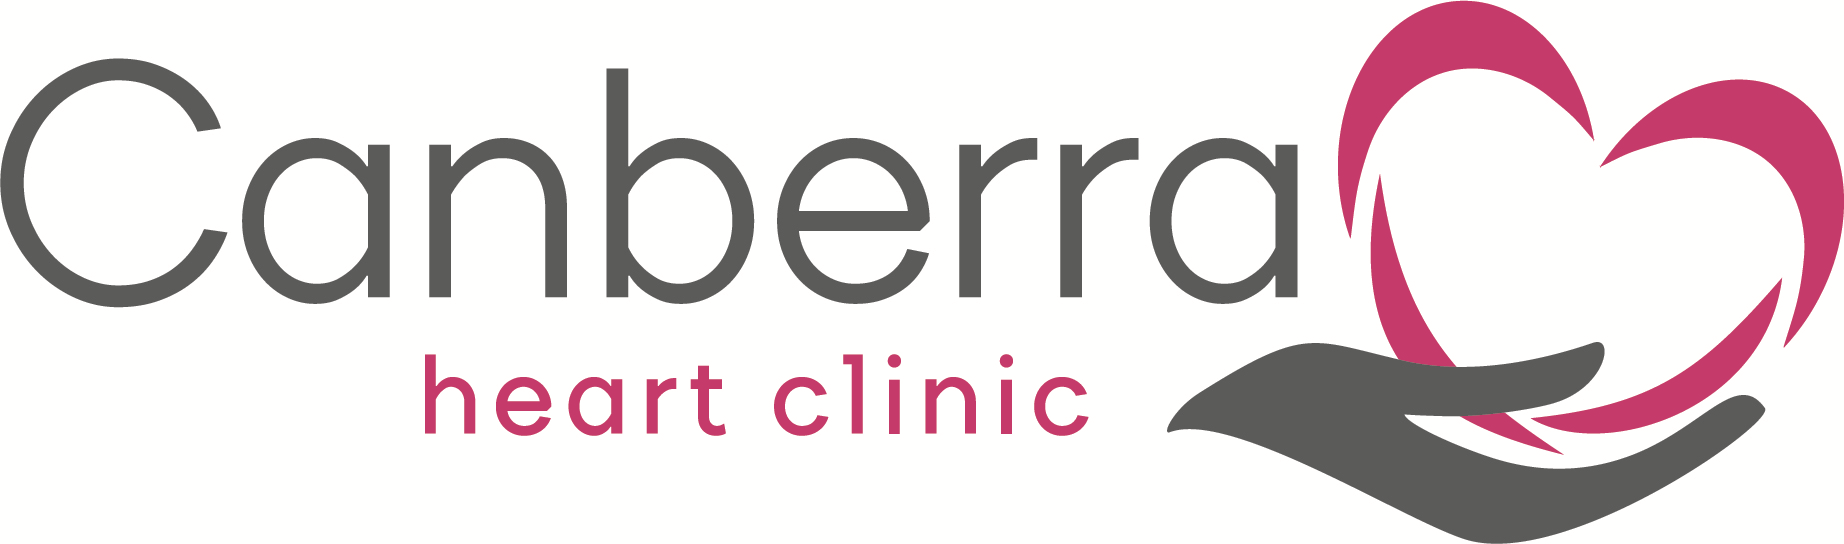 Canberra Heart Clinic Logo